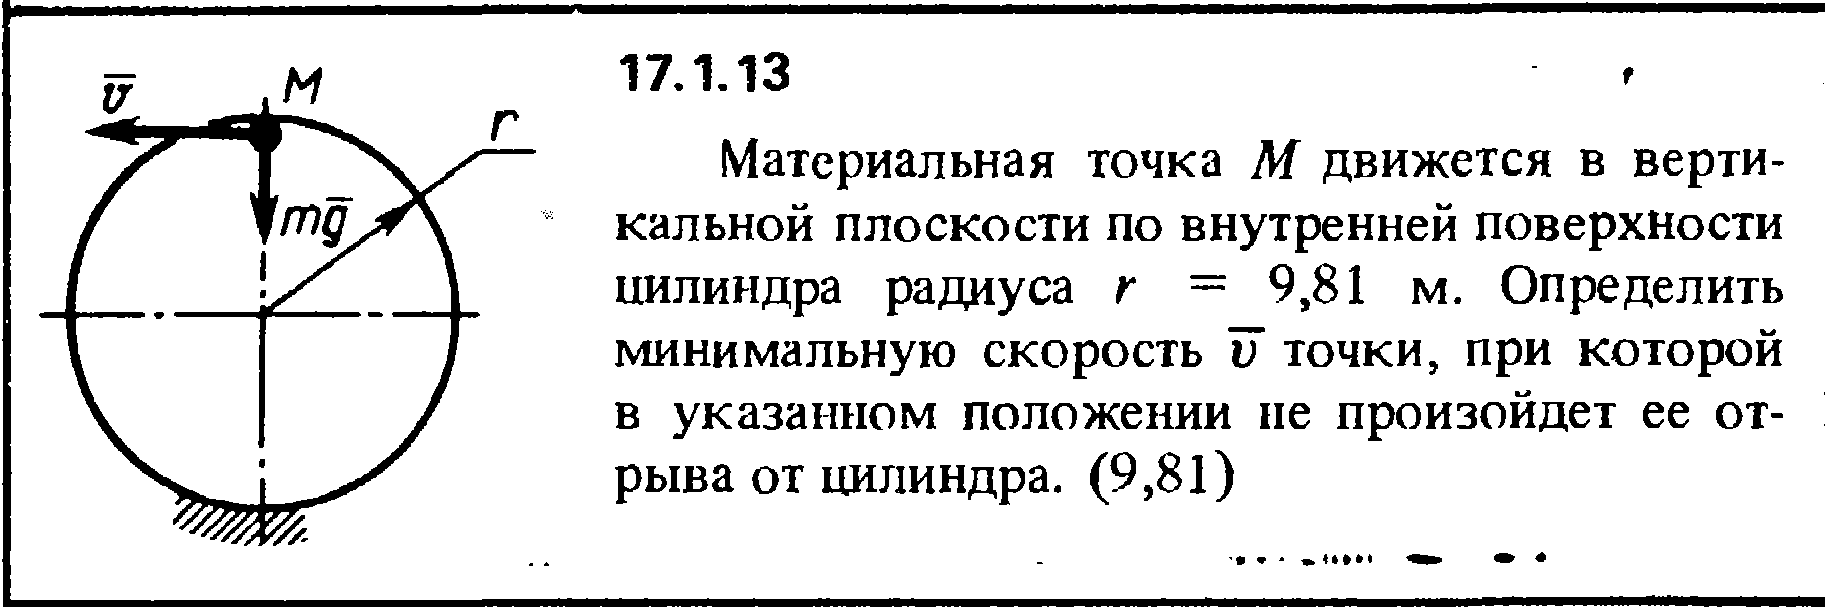 Решение задачи 17.1.13 из сборника Кепе О.Е. 1989